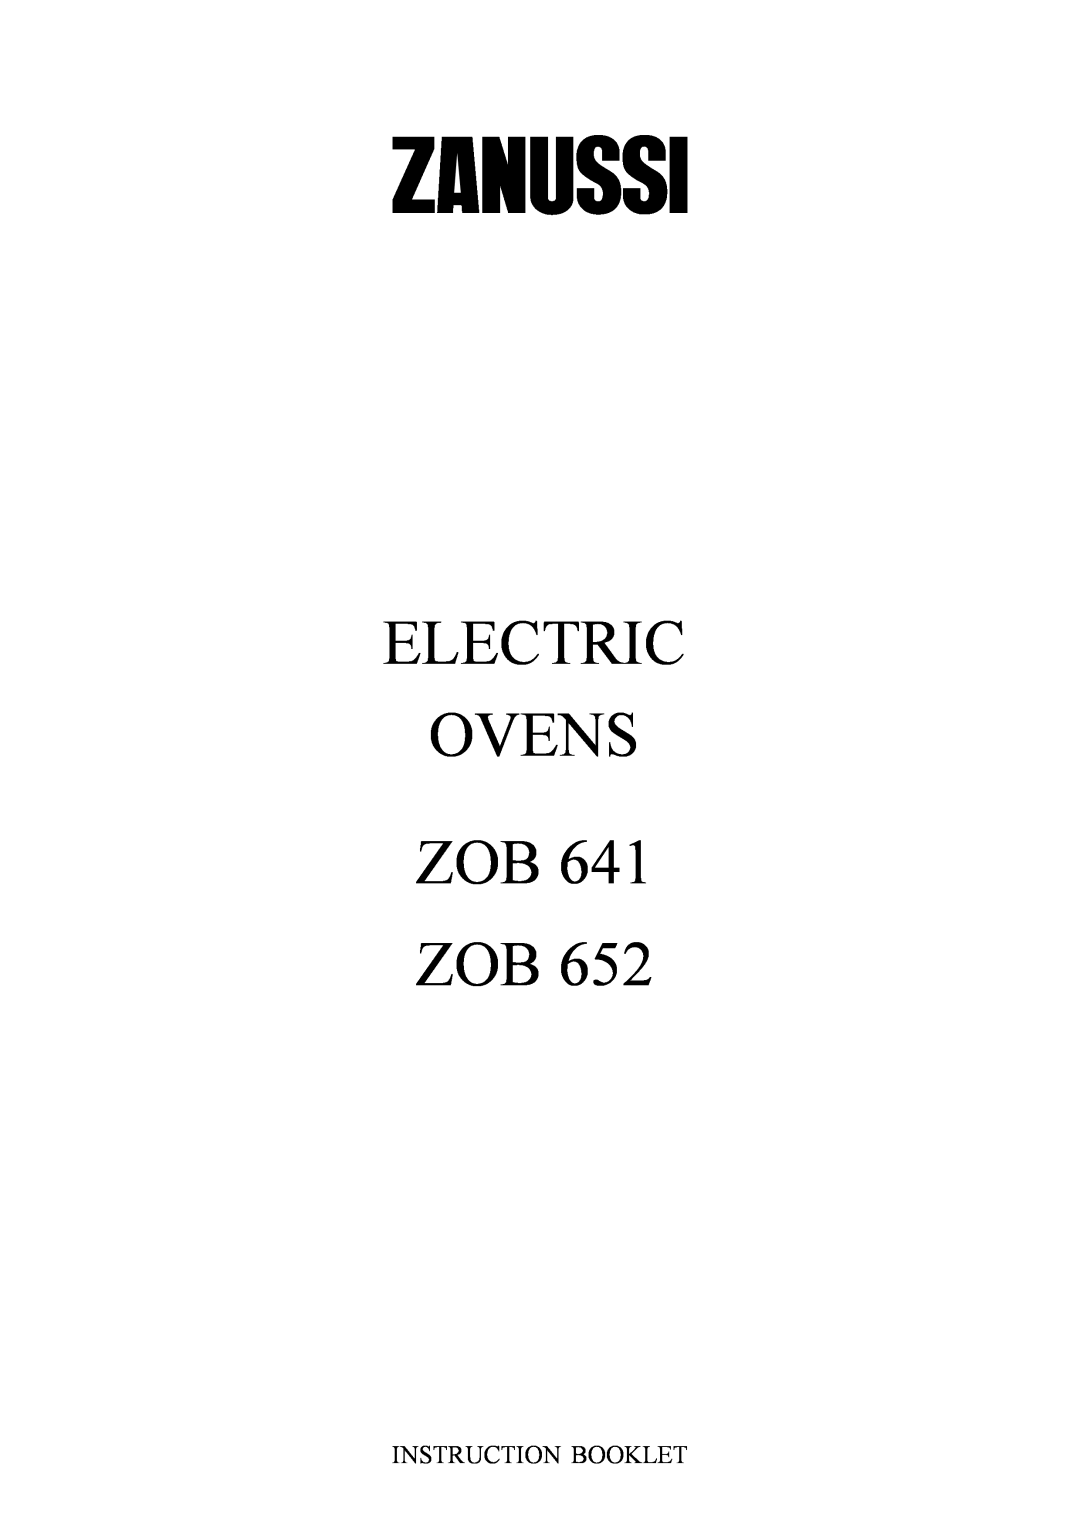 Zanussi ZOB 652 manual Instruction Booklet, Electric Ovens, ZOB 641 ZOB 